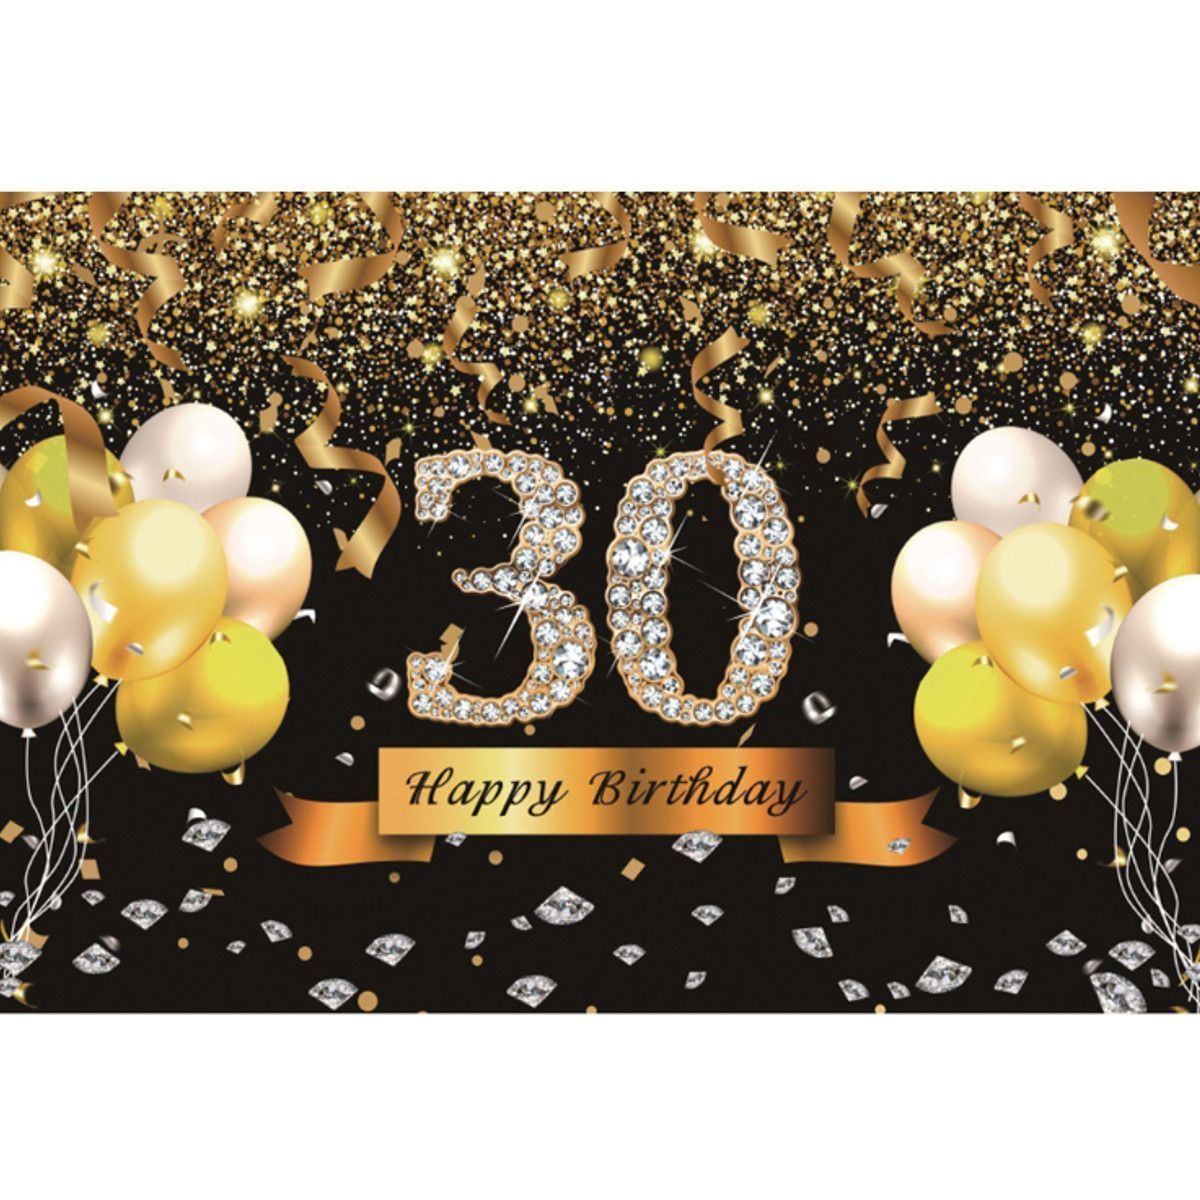 5x7FT-Vinyl-30th-Happy-Birthday-Balloon-Glitter-Photography-Backdrop-Background-Studio-Prop-1638958